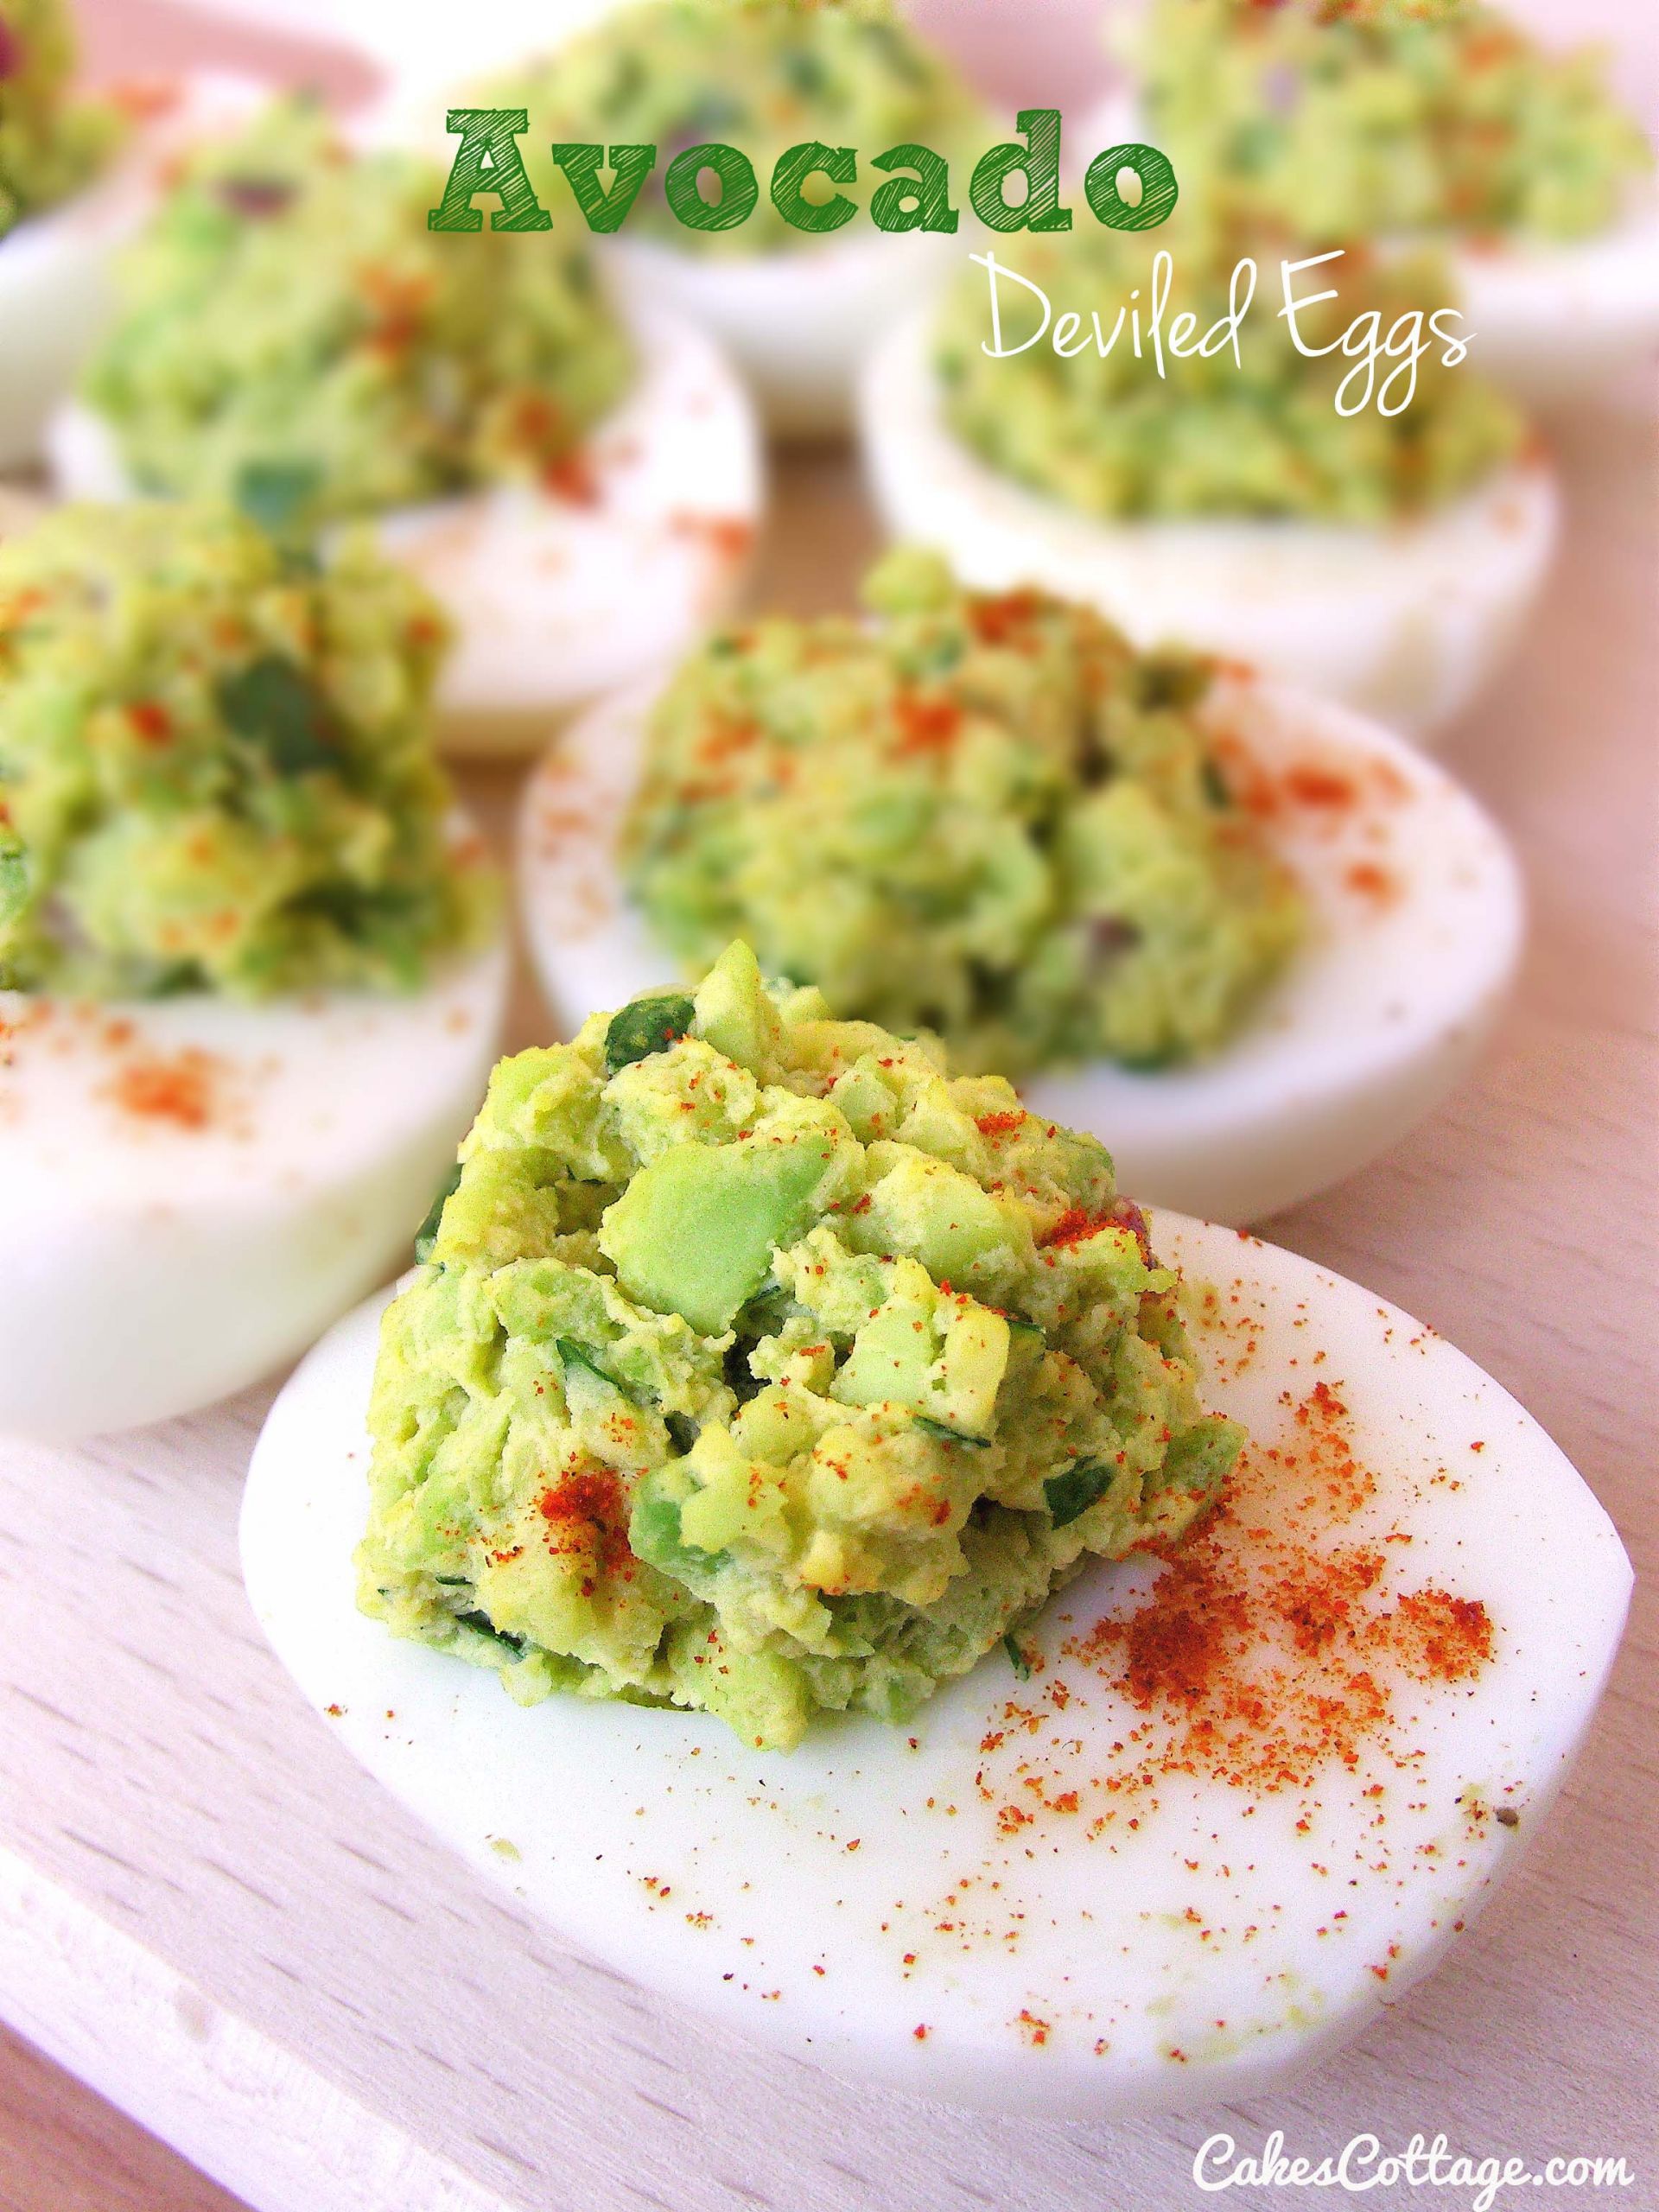 Fancy Deviled Eggs Recipe
 Avocado Deviled Eggs Cakescottage